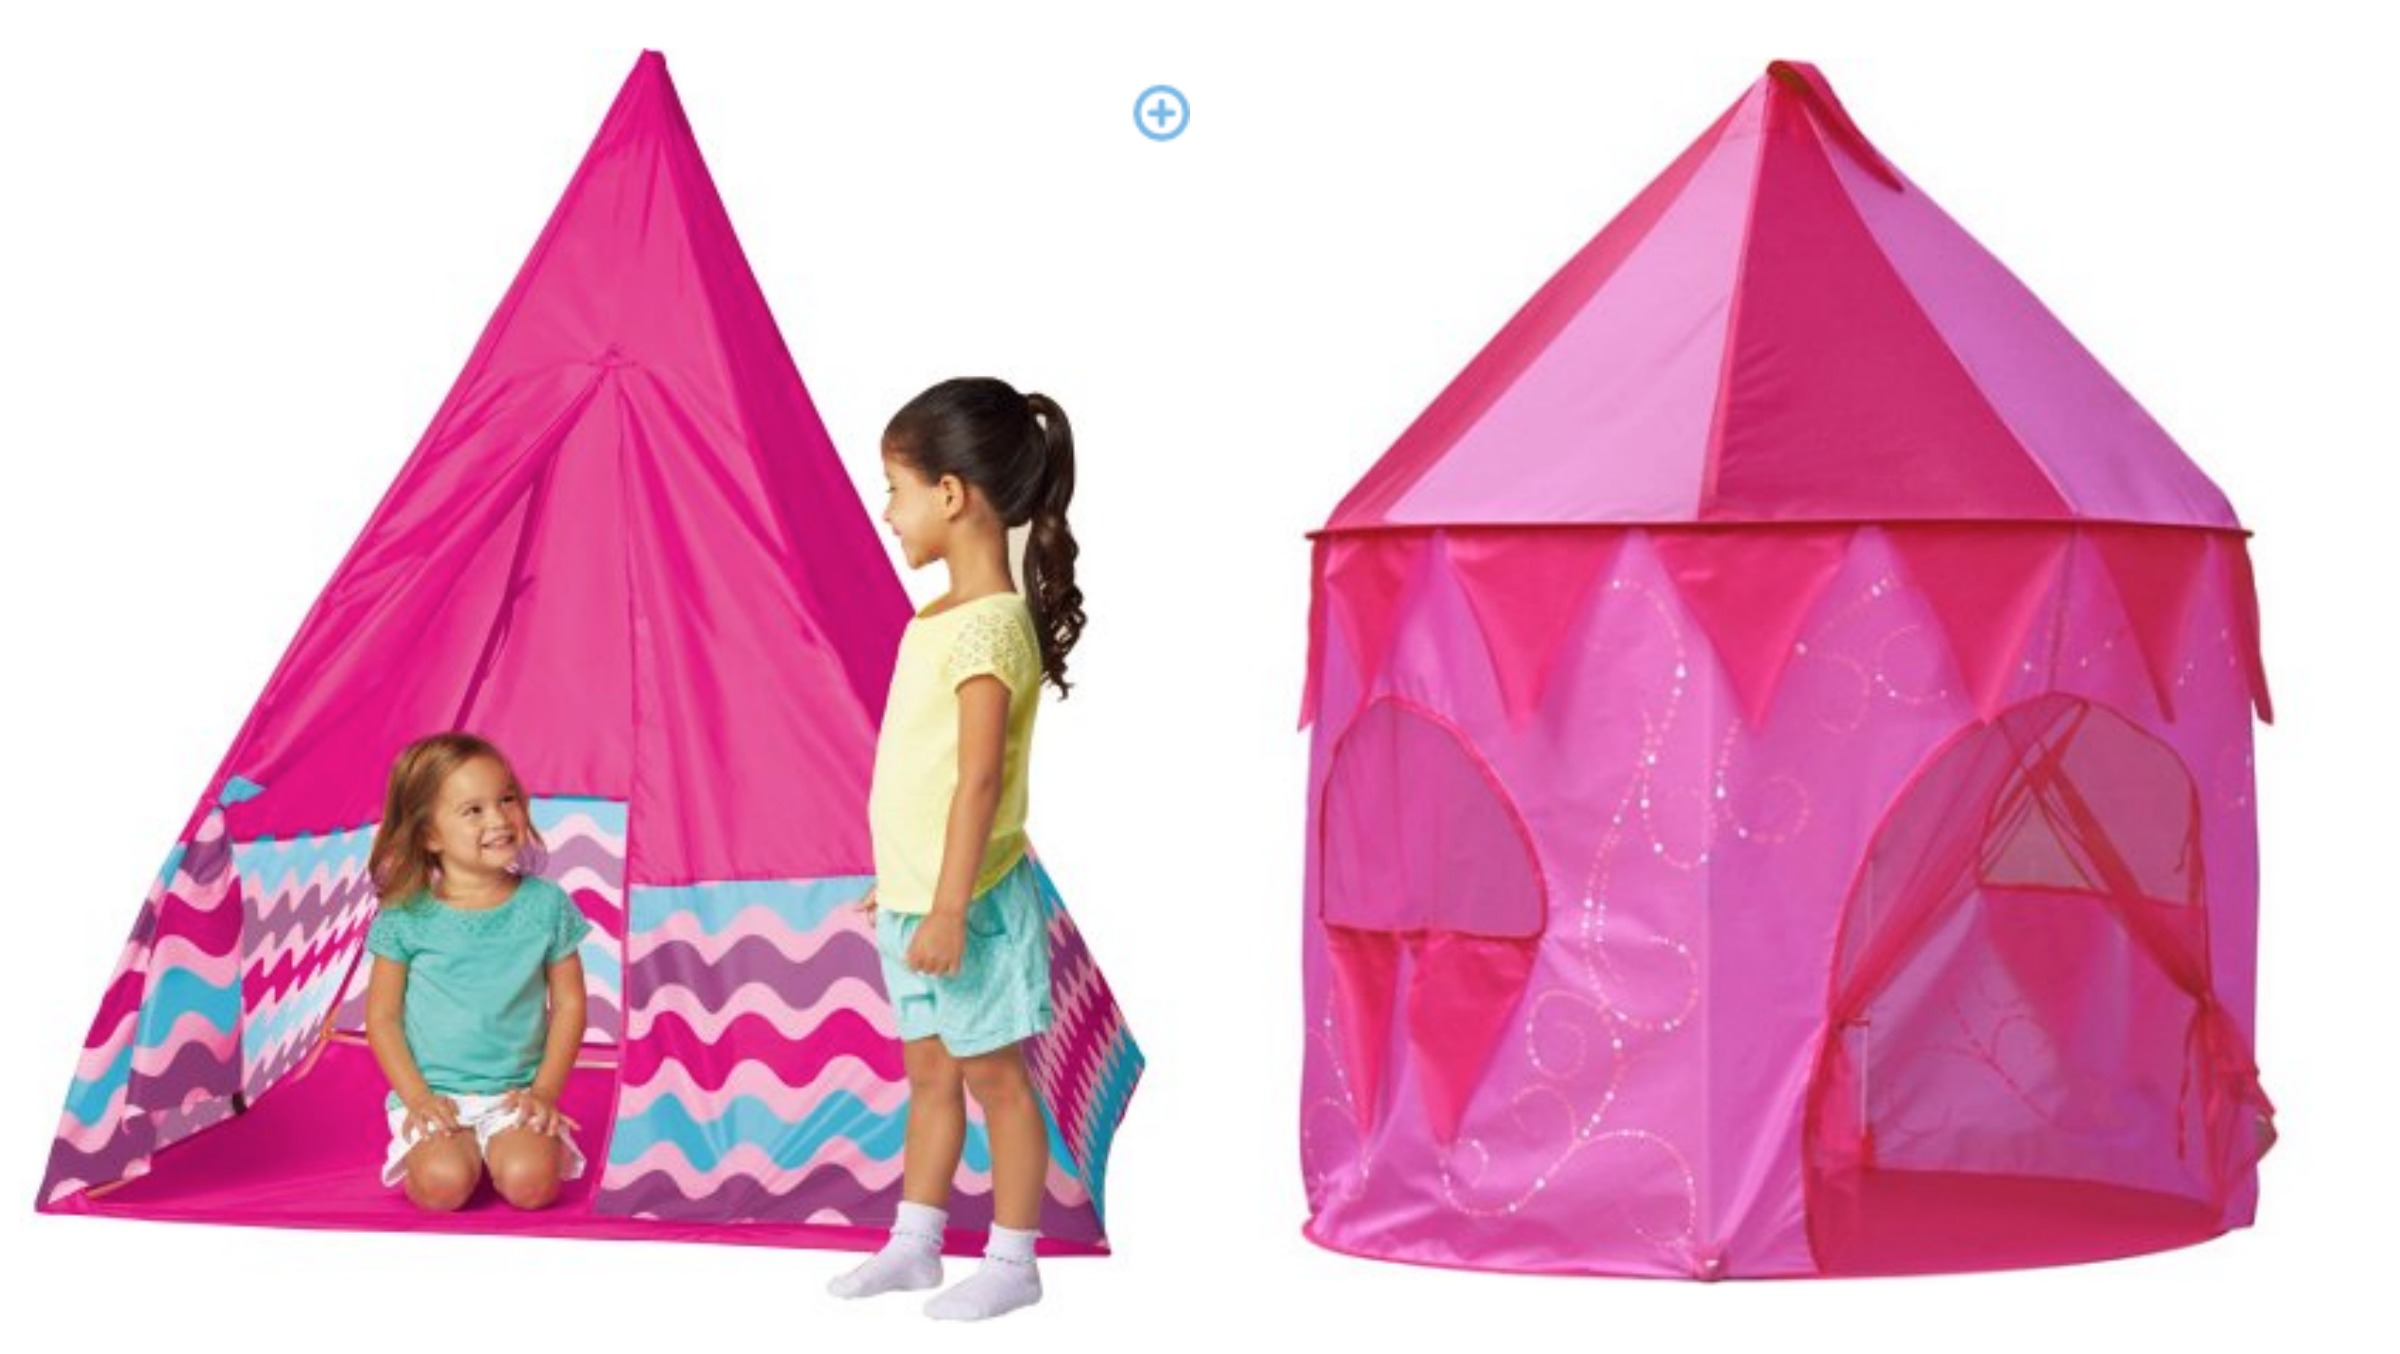 RUN! Kids Fabric Tepee only $9.97! (Reg. $17.88) & Princess Tower Play Tent only $15.41 (Reg. $24)